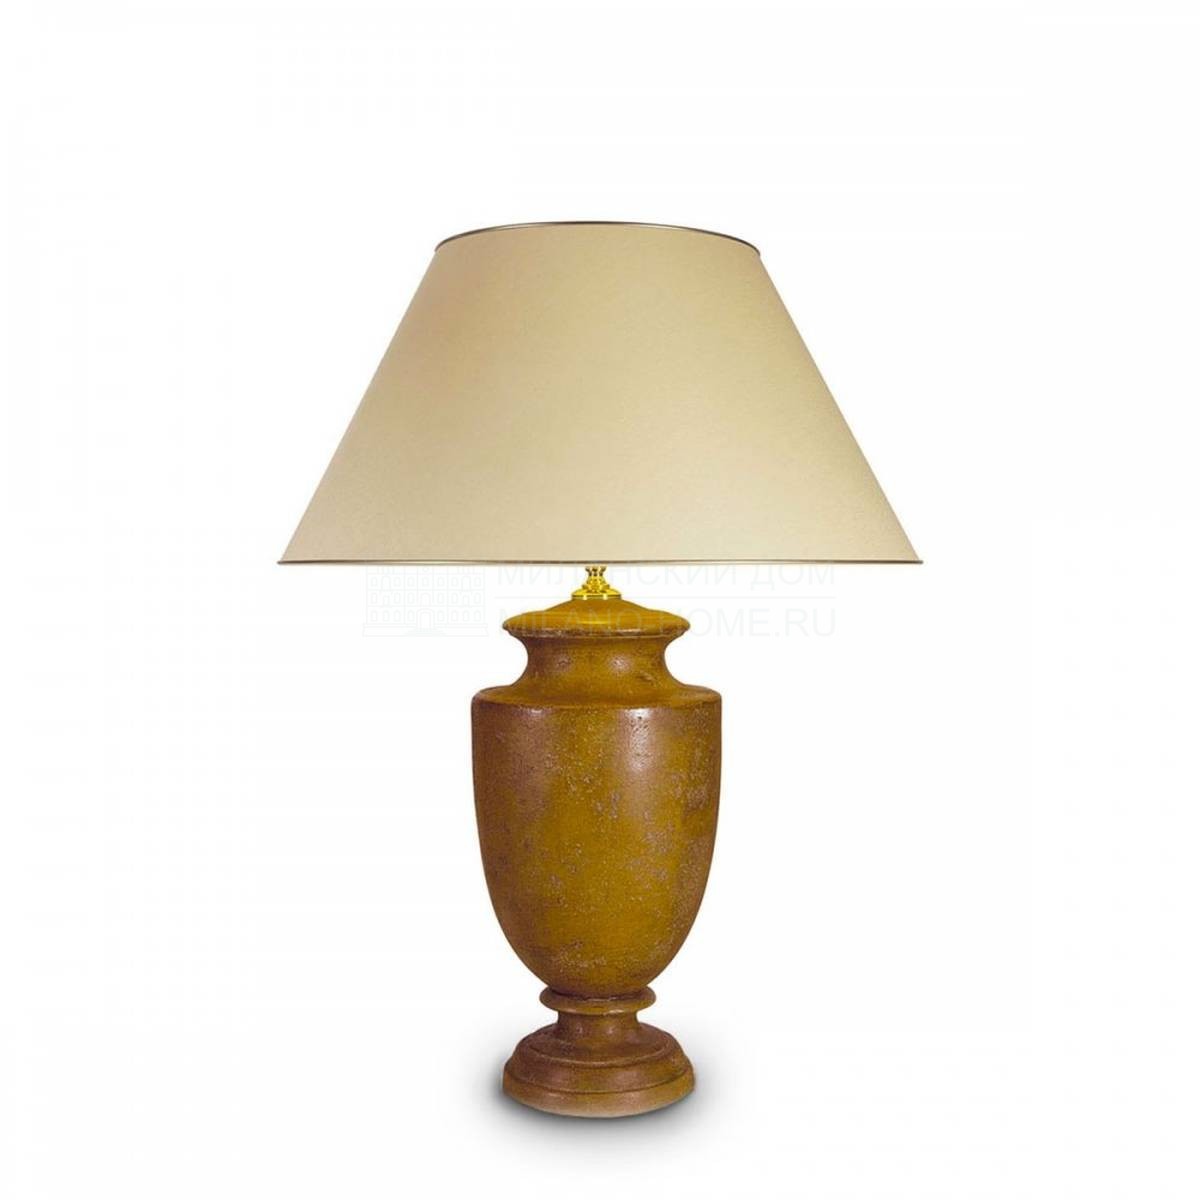 Настольная лампа Timber table lamp из Италии фабрики MARIONI